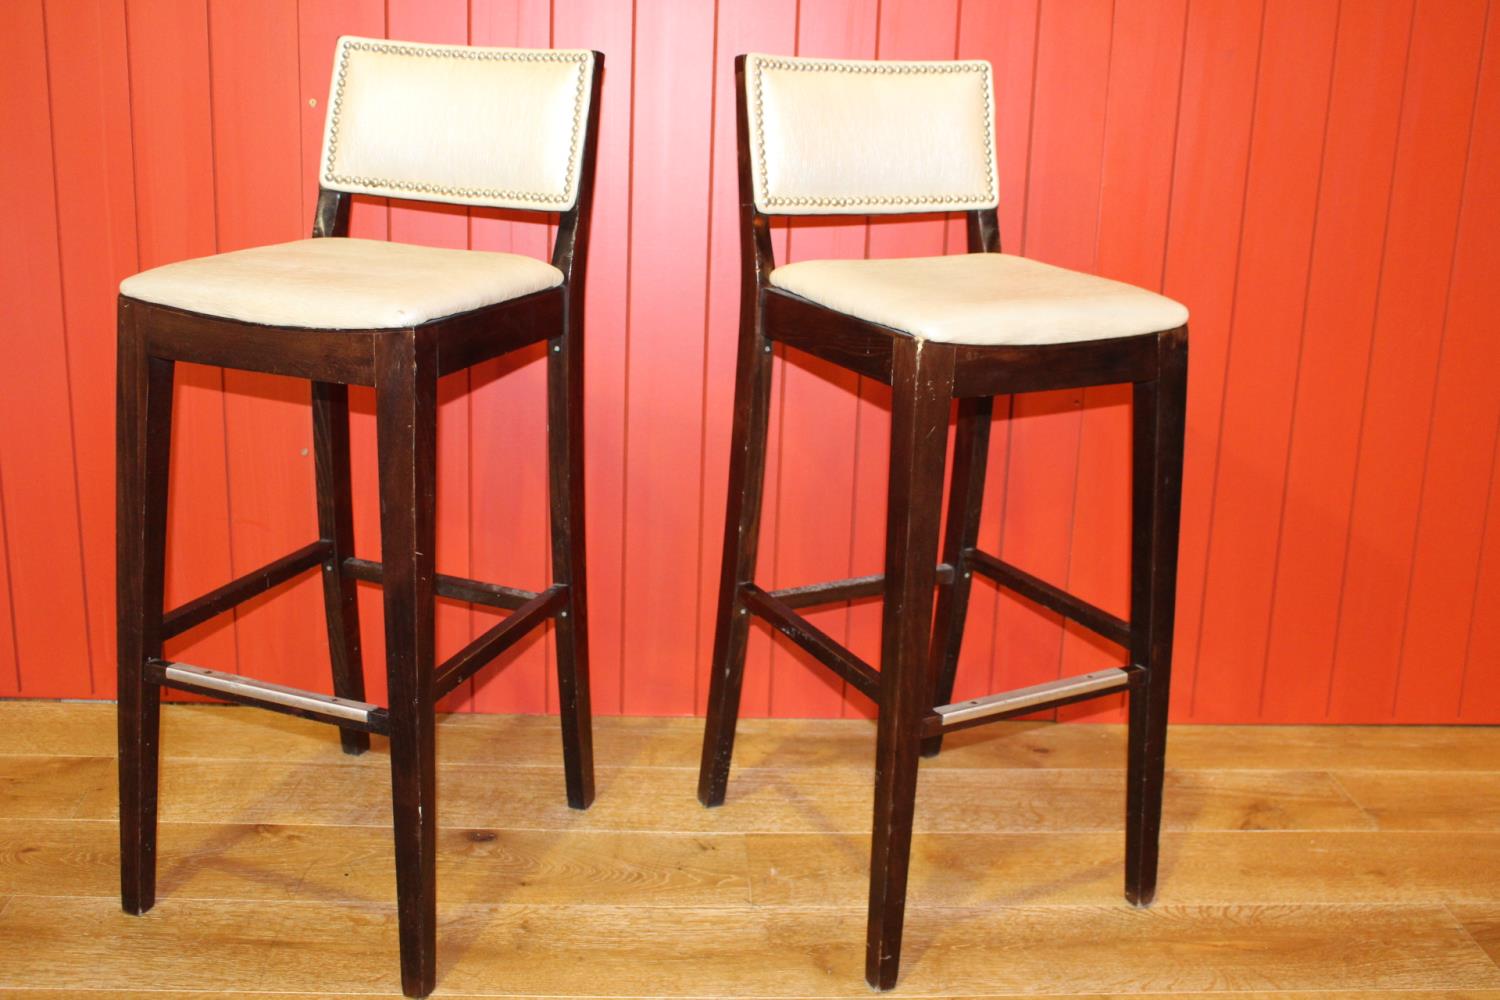 Pair of high back bar stools